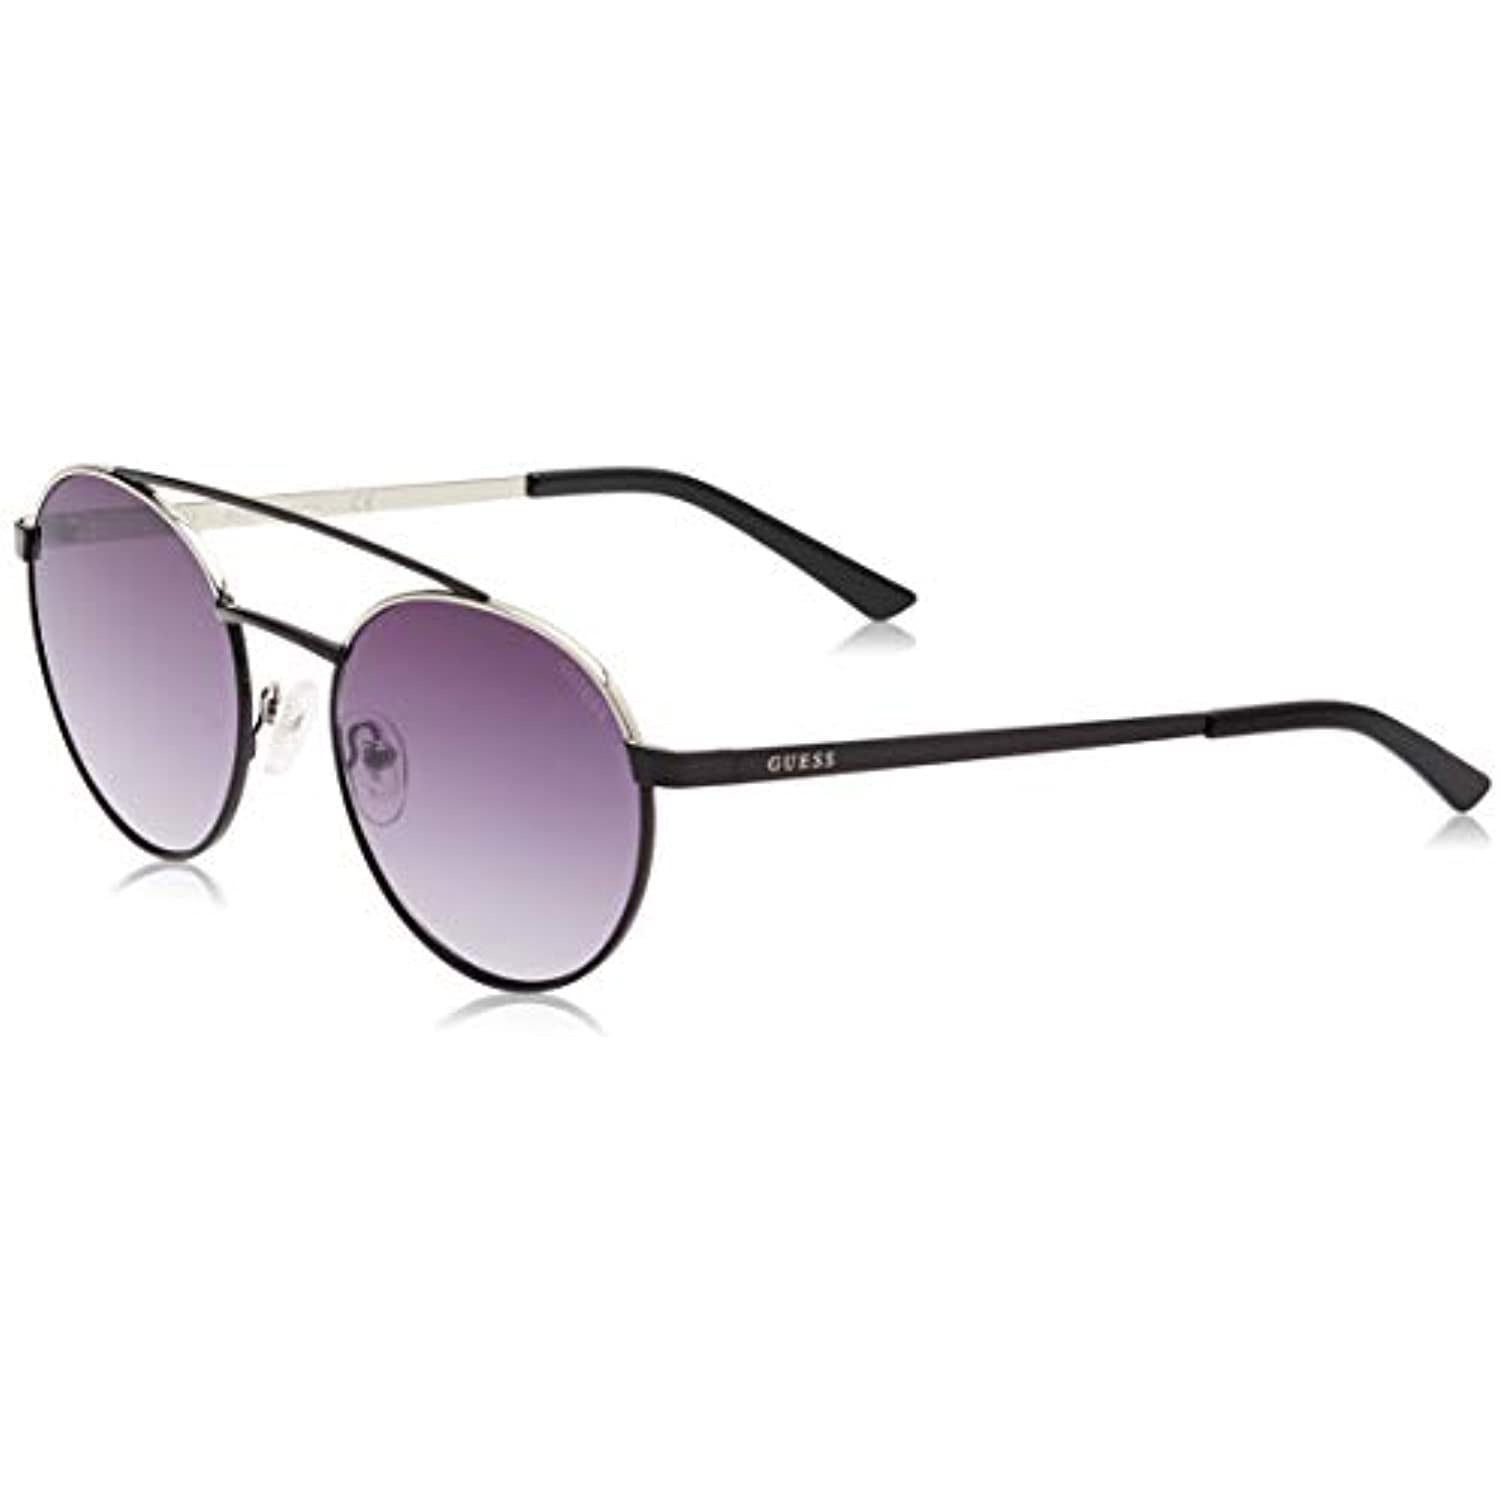 HNO11 OGP Costa Hinano Black w Grey 580P lens NEW Sunglasses 